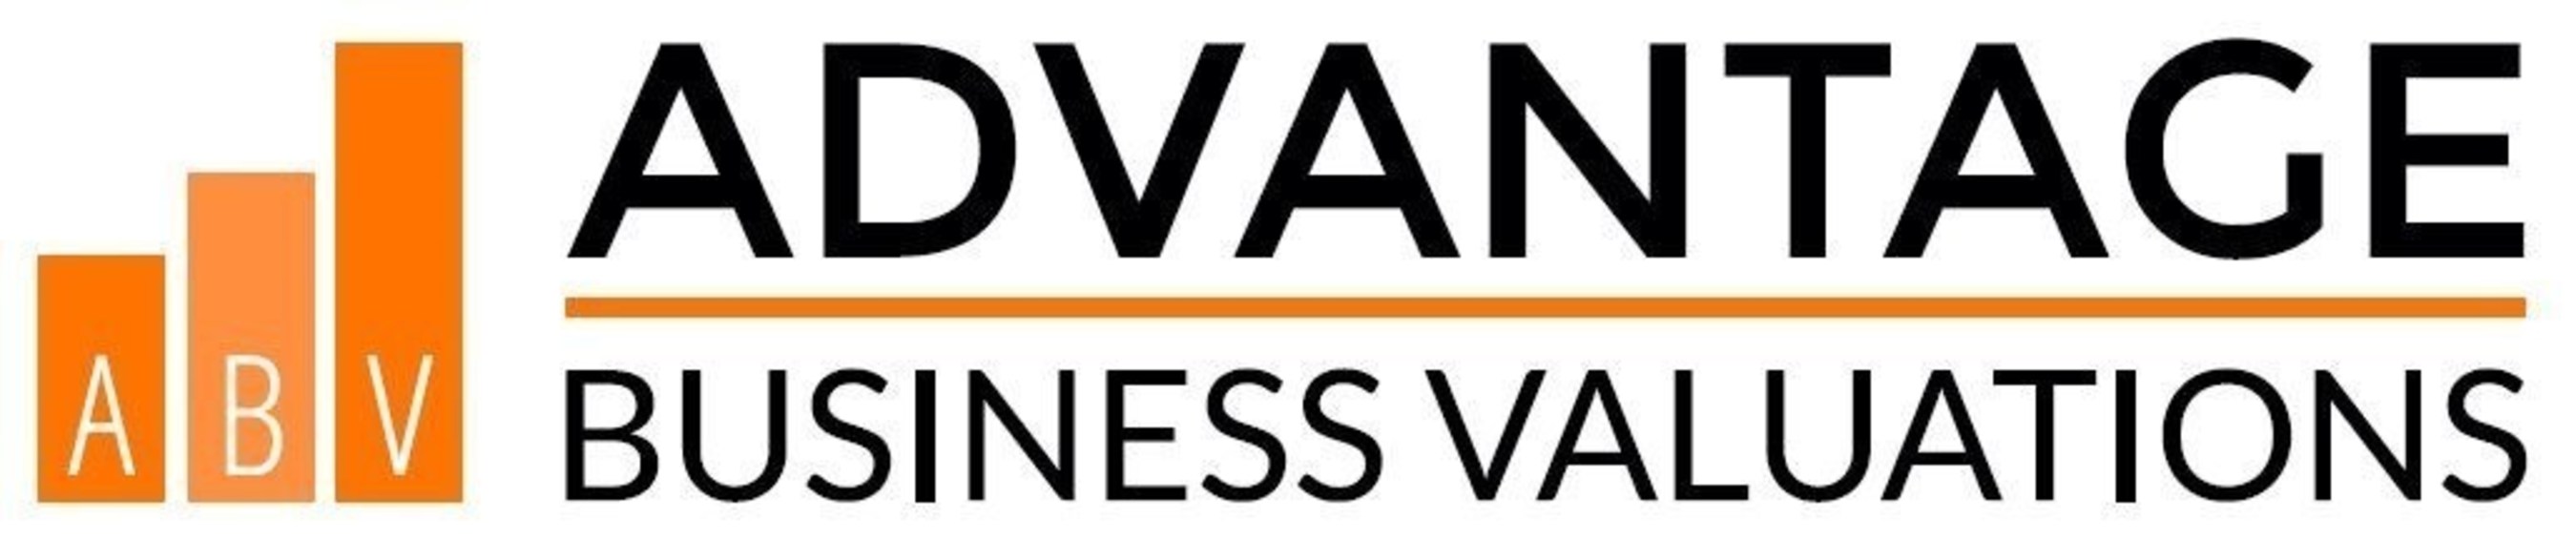 Advantage Business Valuations logo